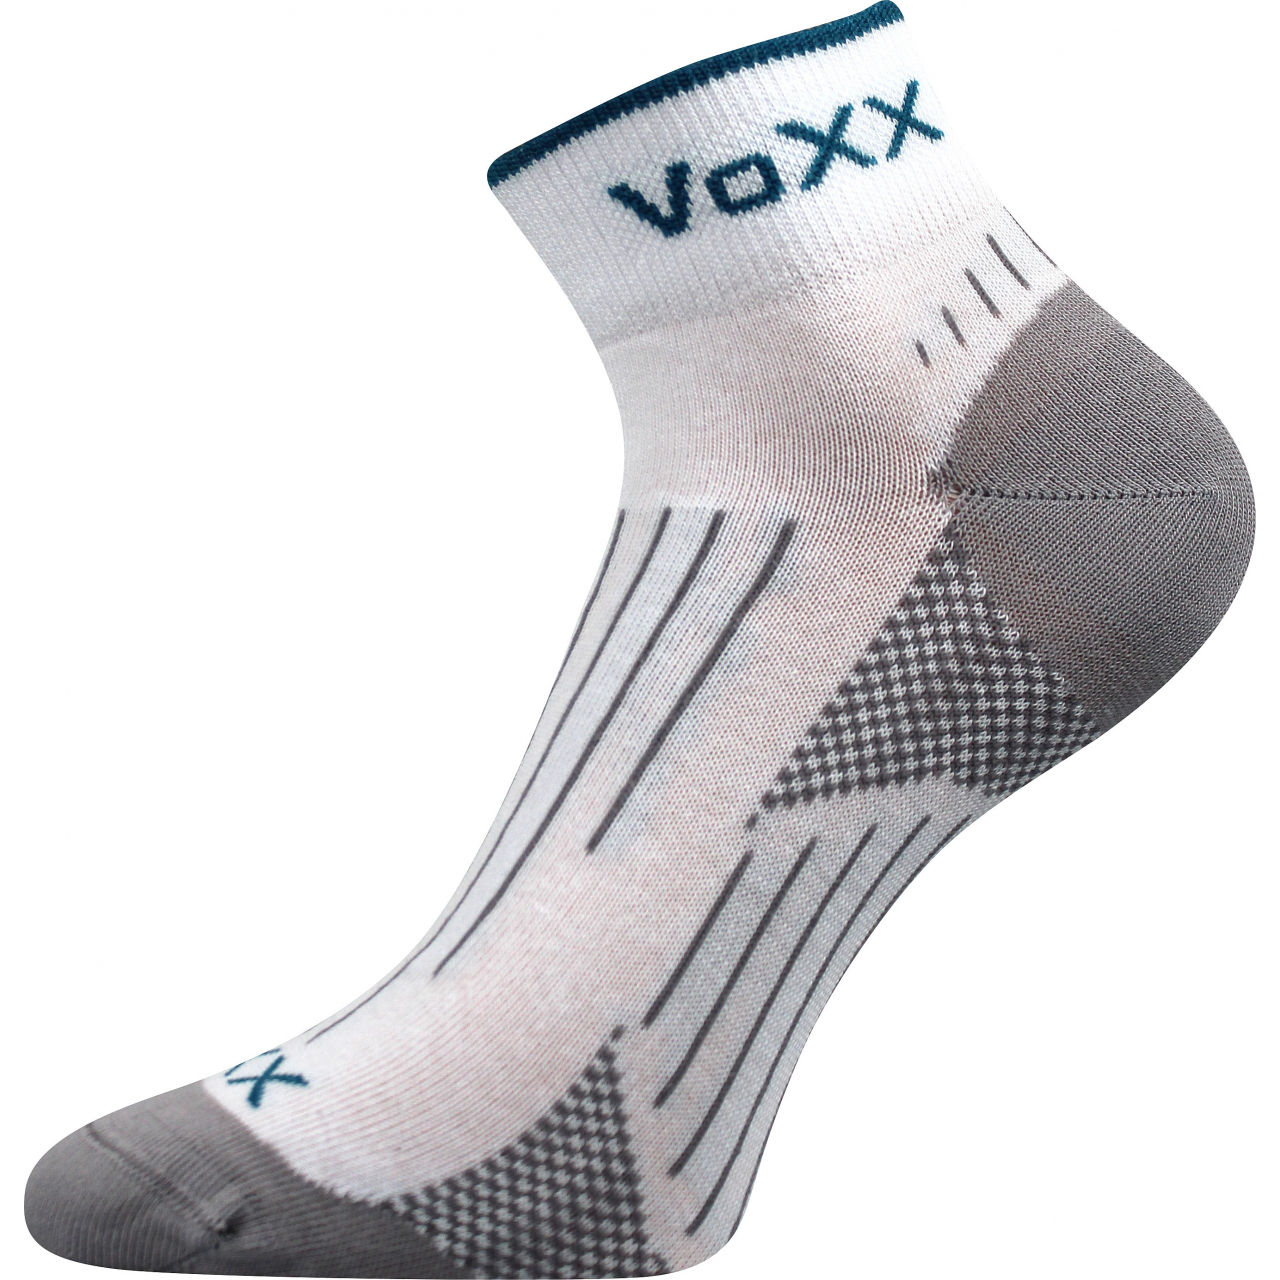 Ponožky tenké unisex Voxx Azul - bílé, 39-42